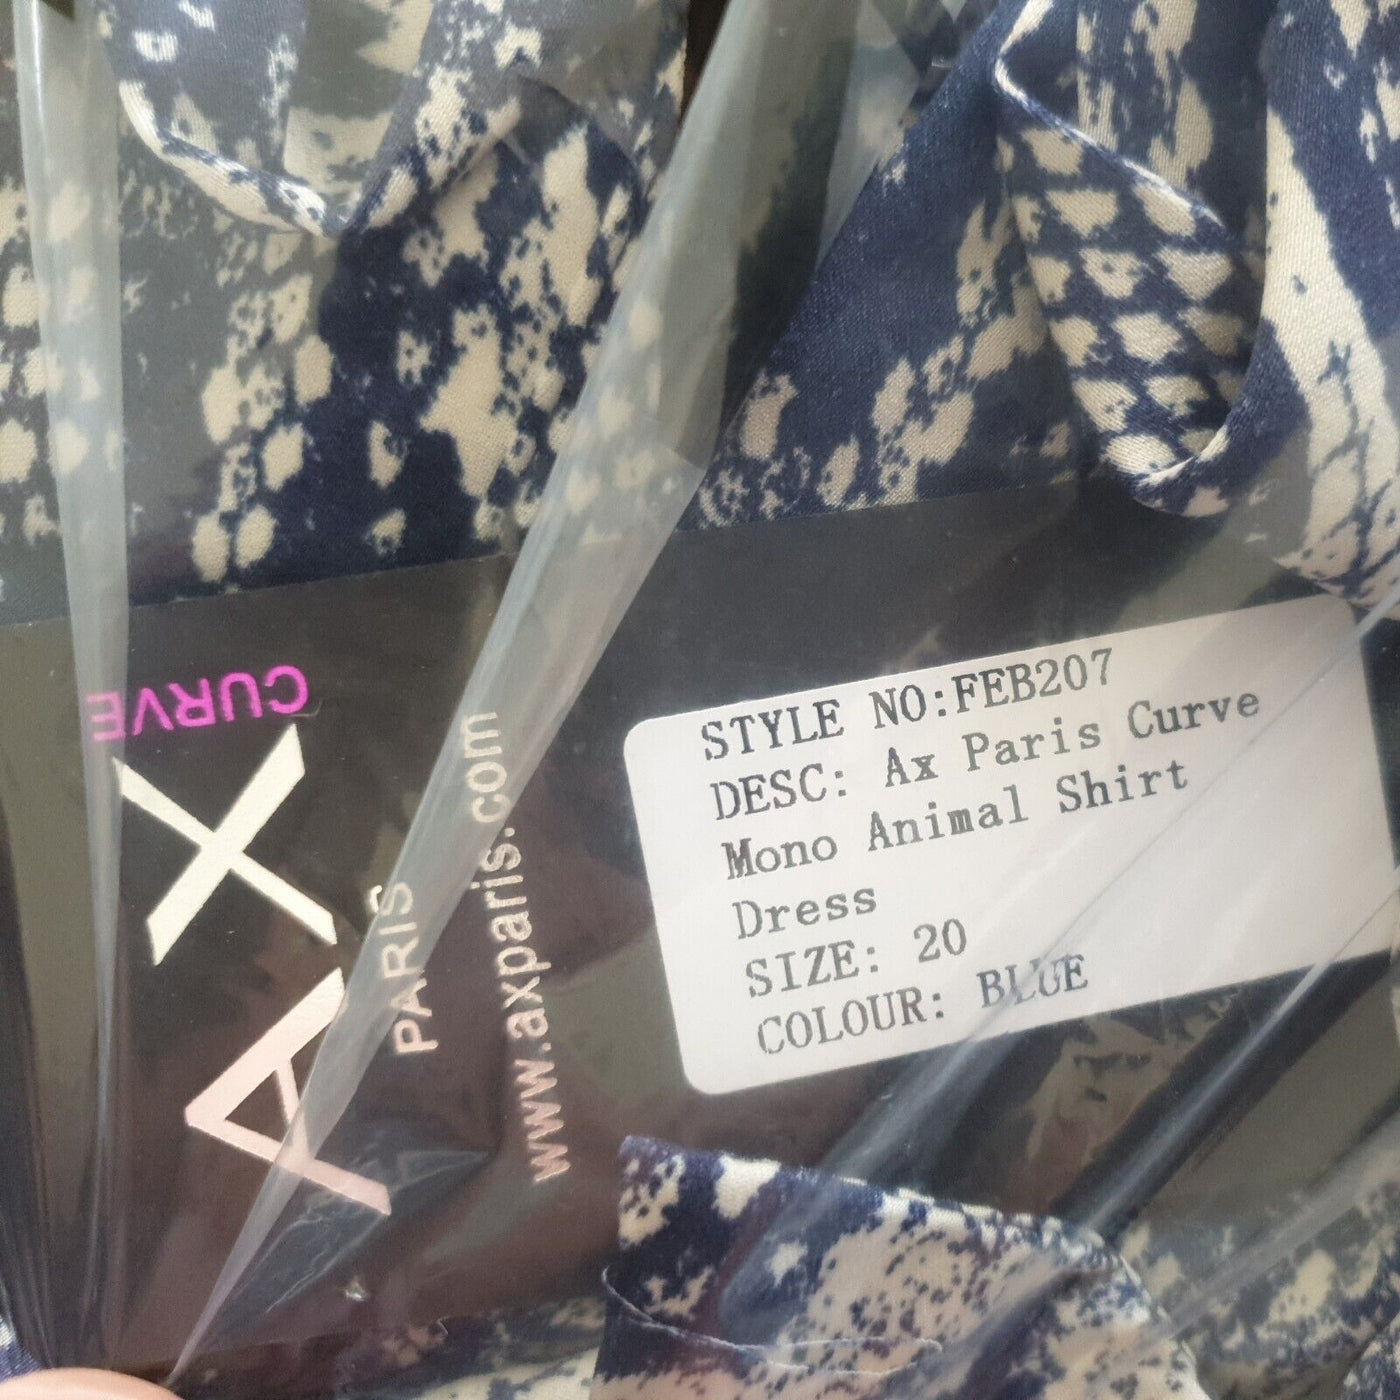 AX Paris Curve Mono Animal Shirt Dress Size 22.